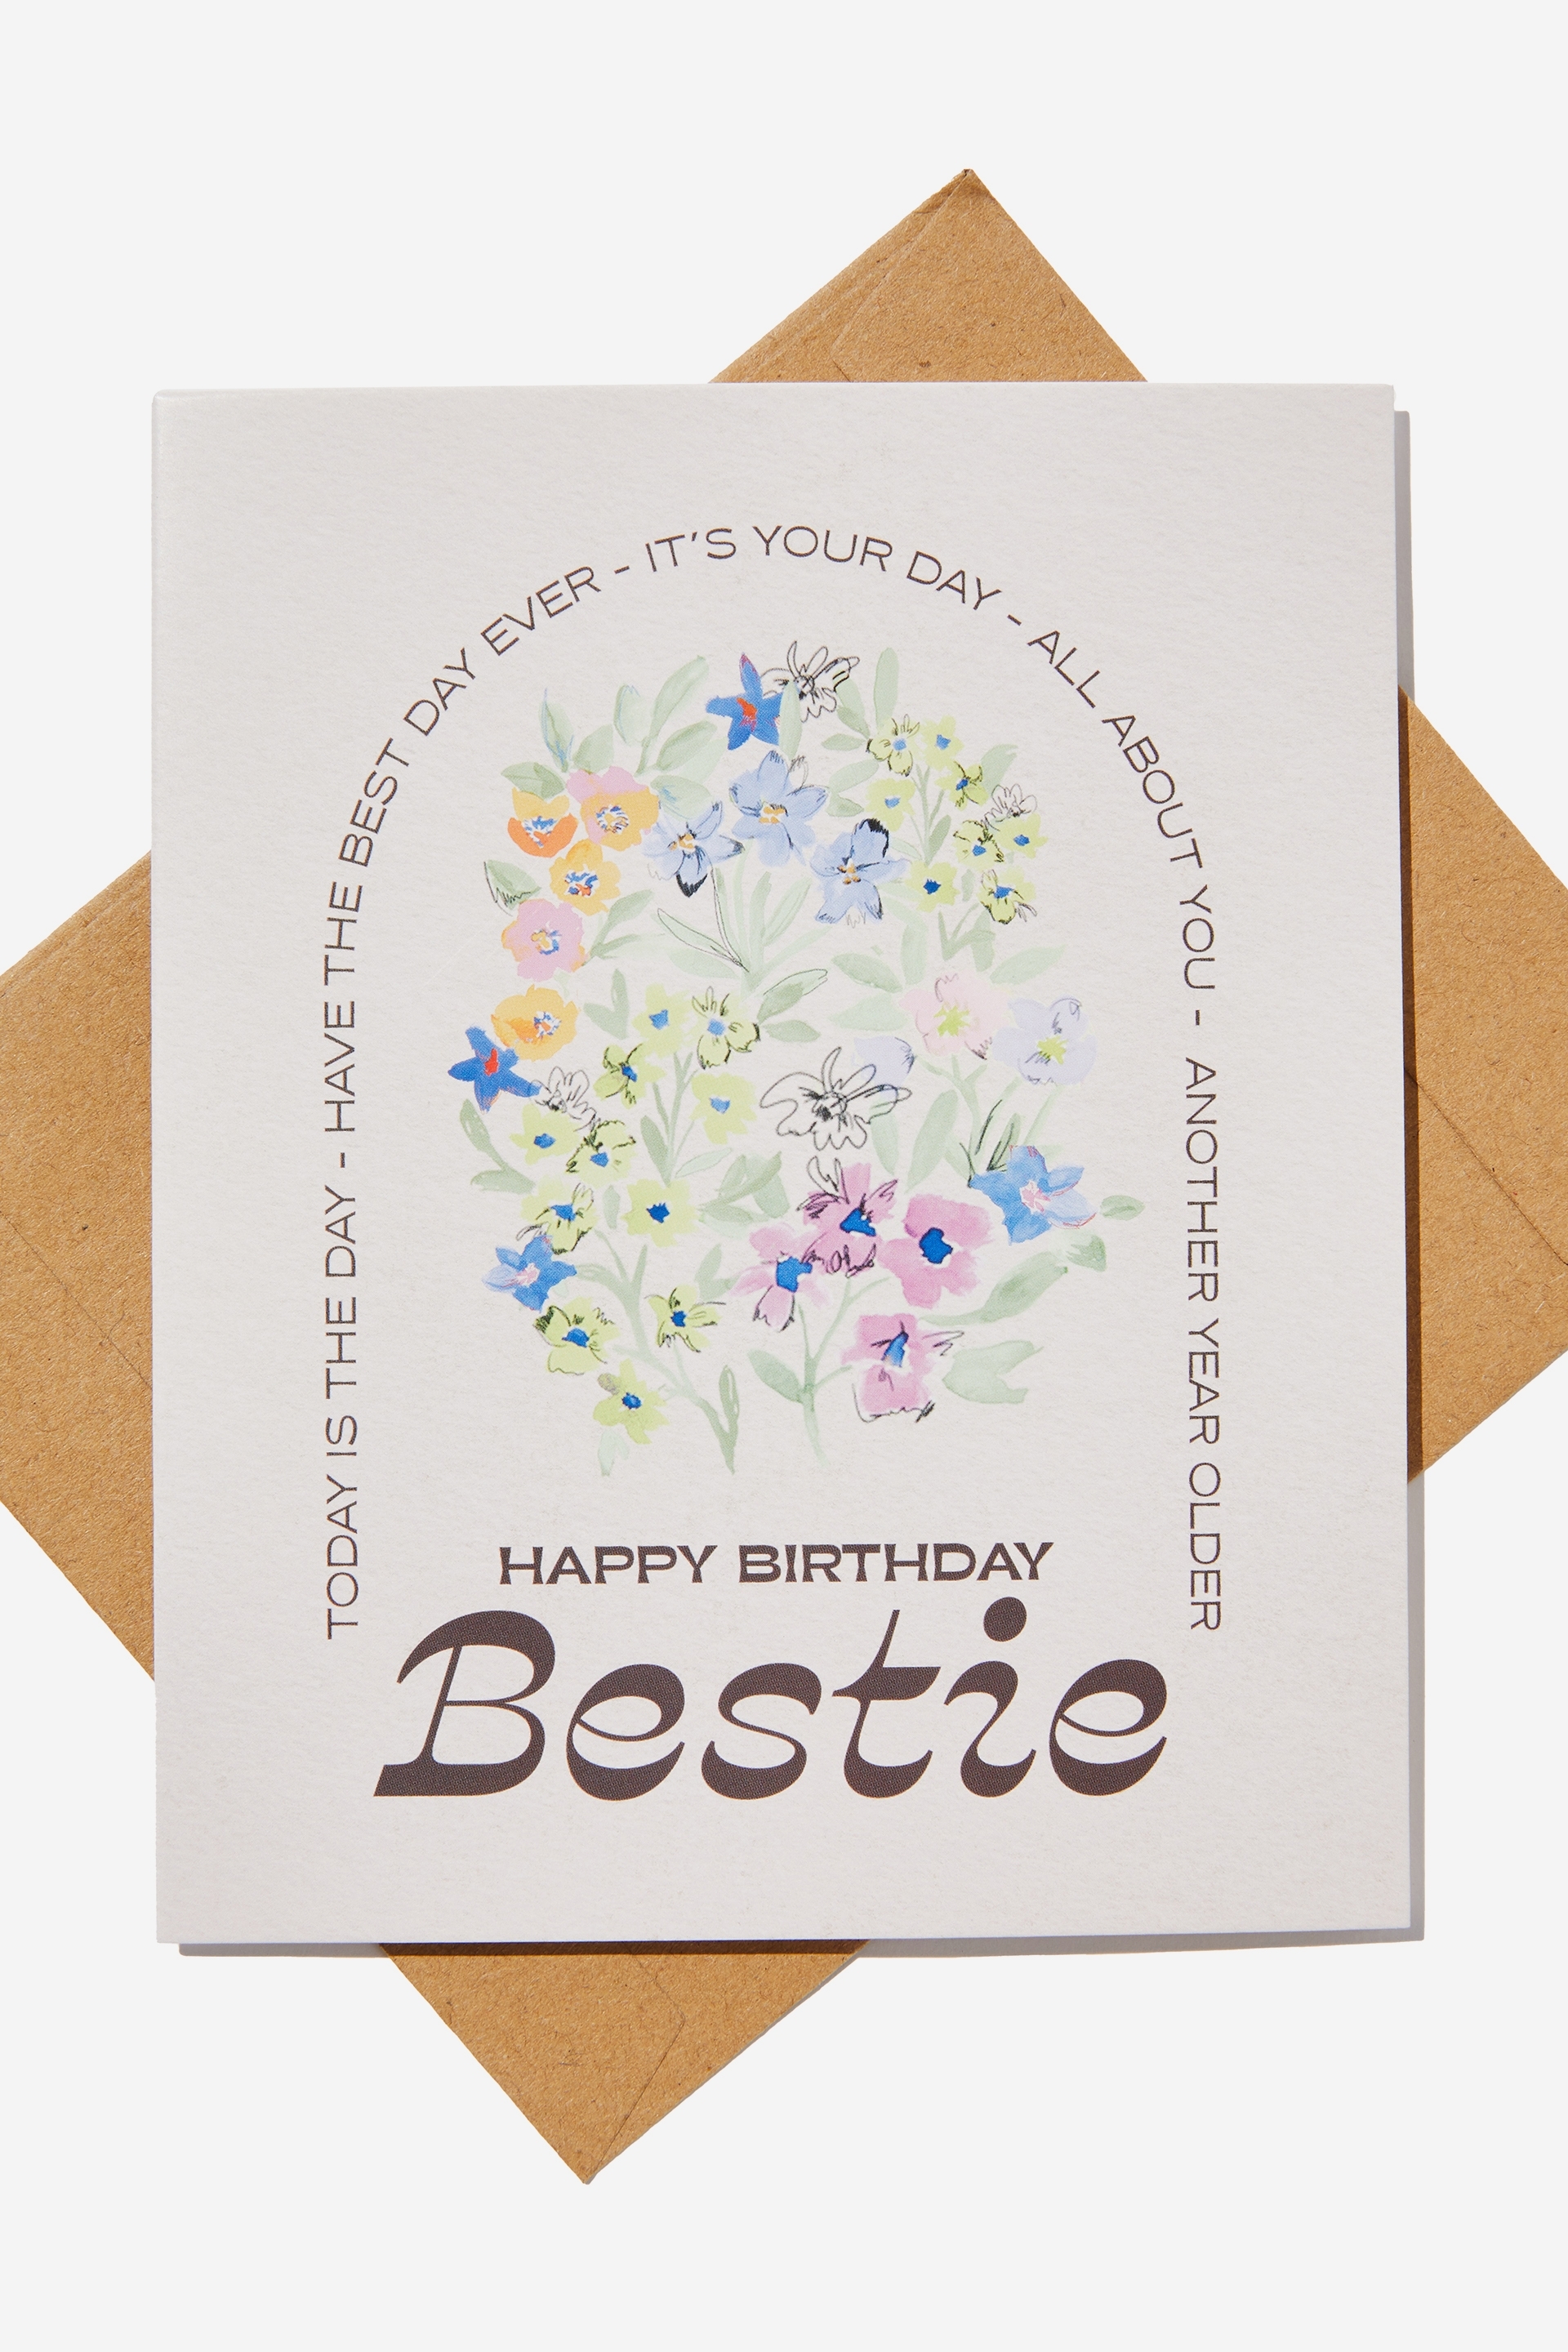 Typo - Nice Birthday Card - Handcrafted floral happy birthday bestie